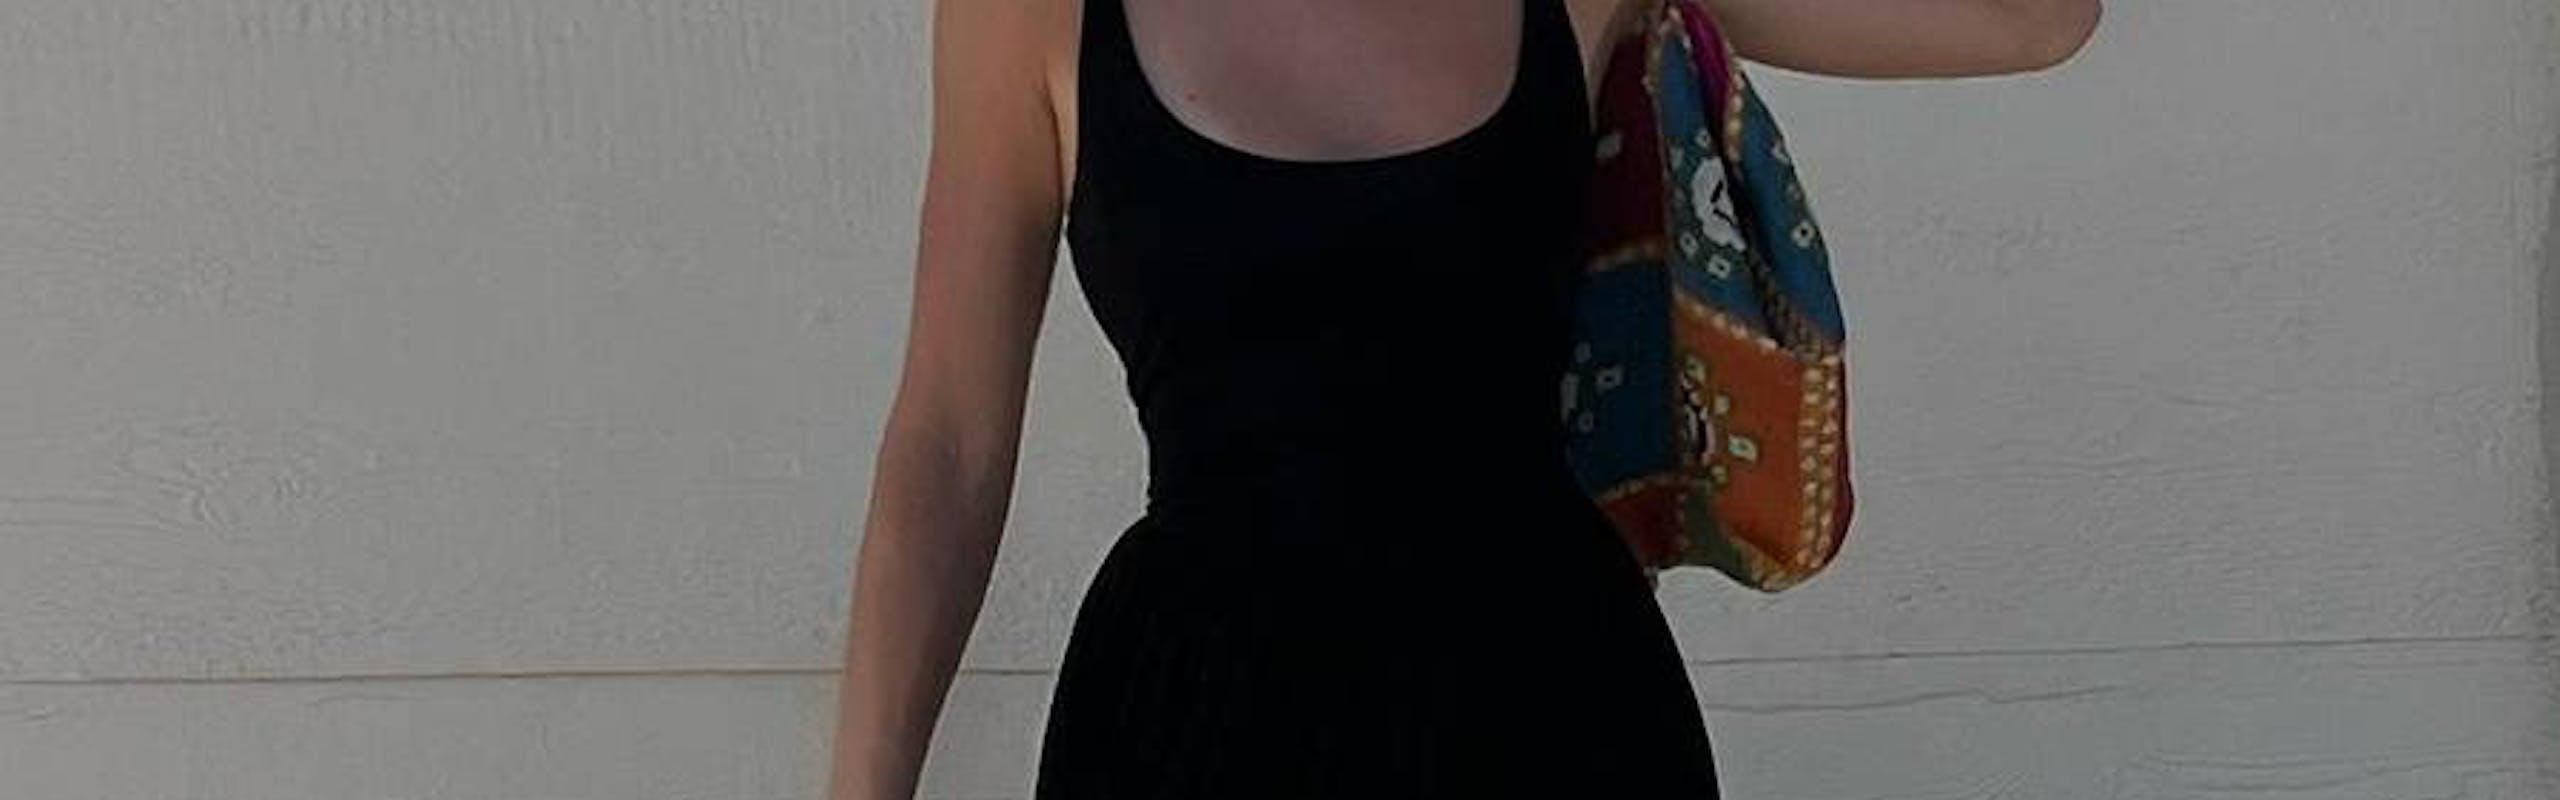 kendall jenner wearing black drop waist dress and sunglasses